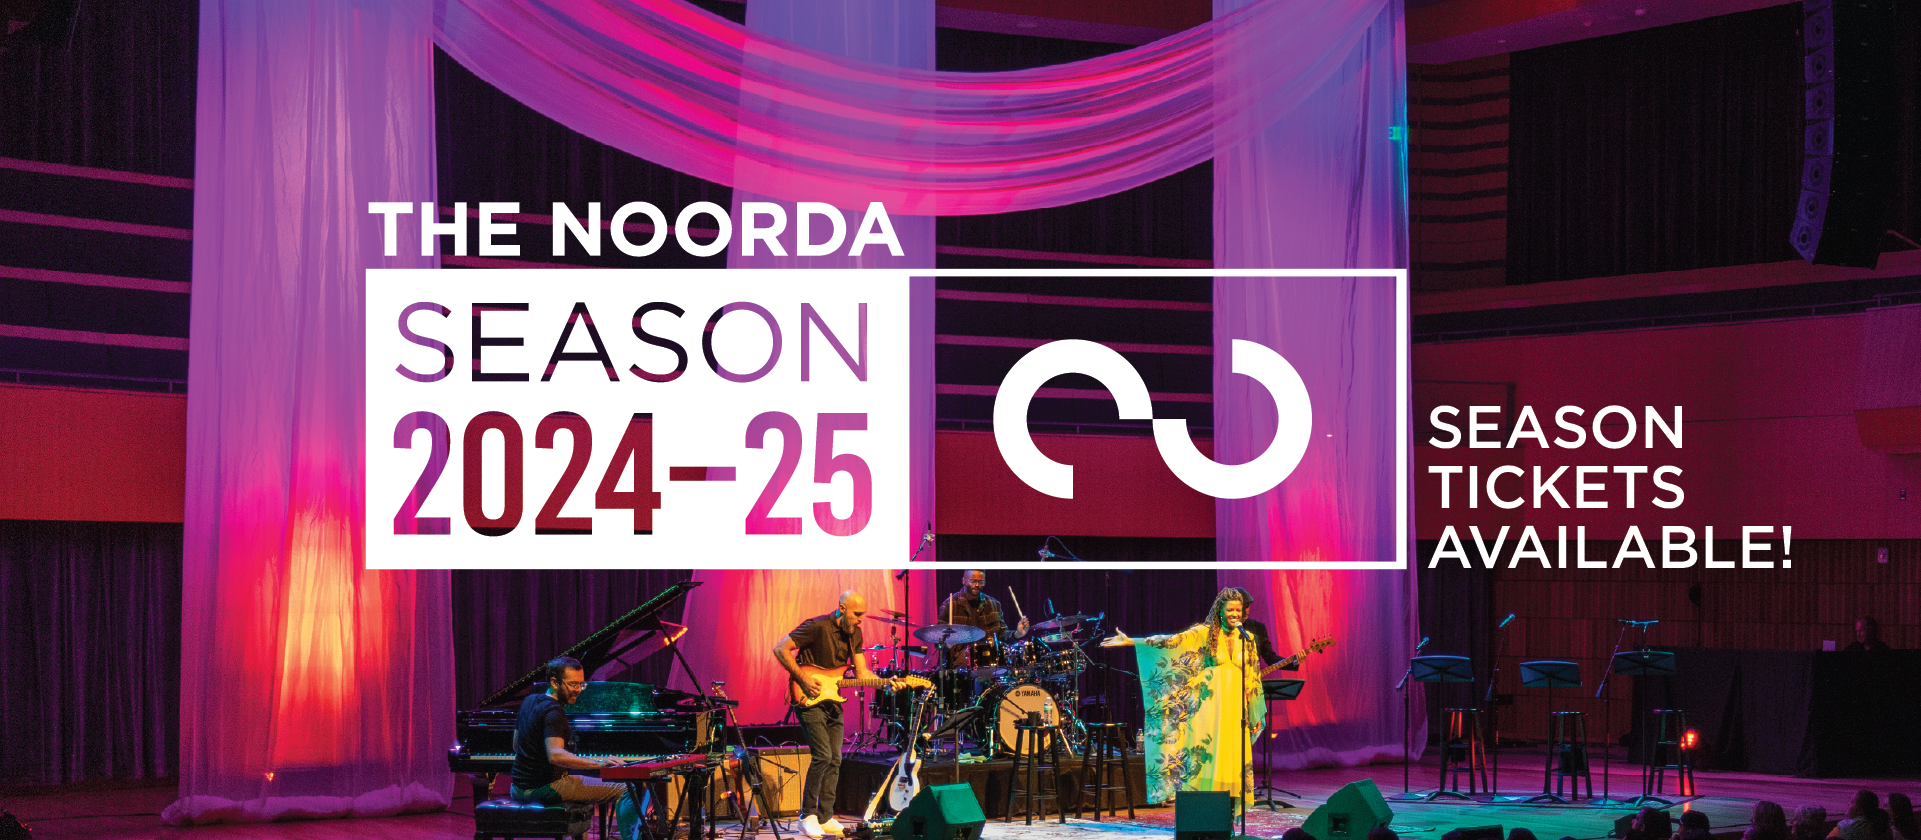 The Noorda Season 2024-25 | Season Tickets Available!